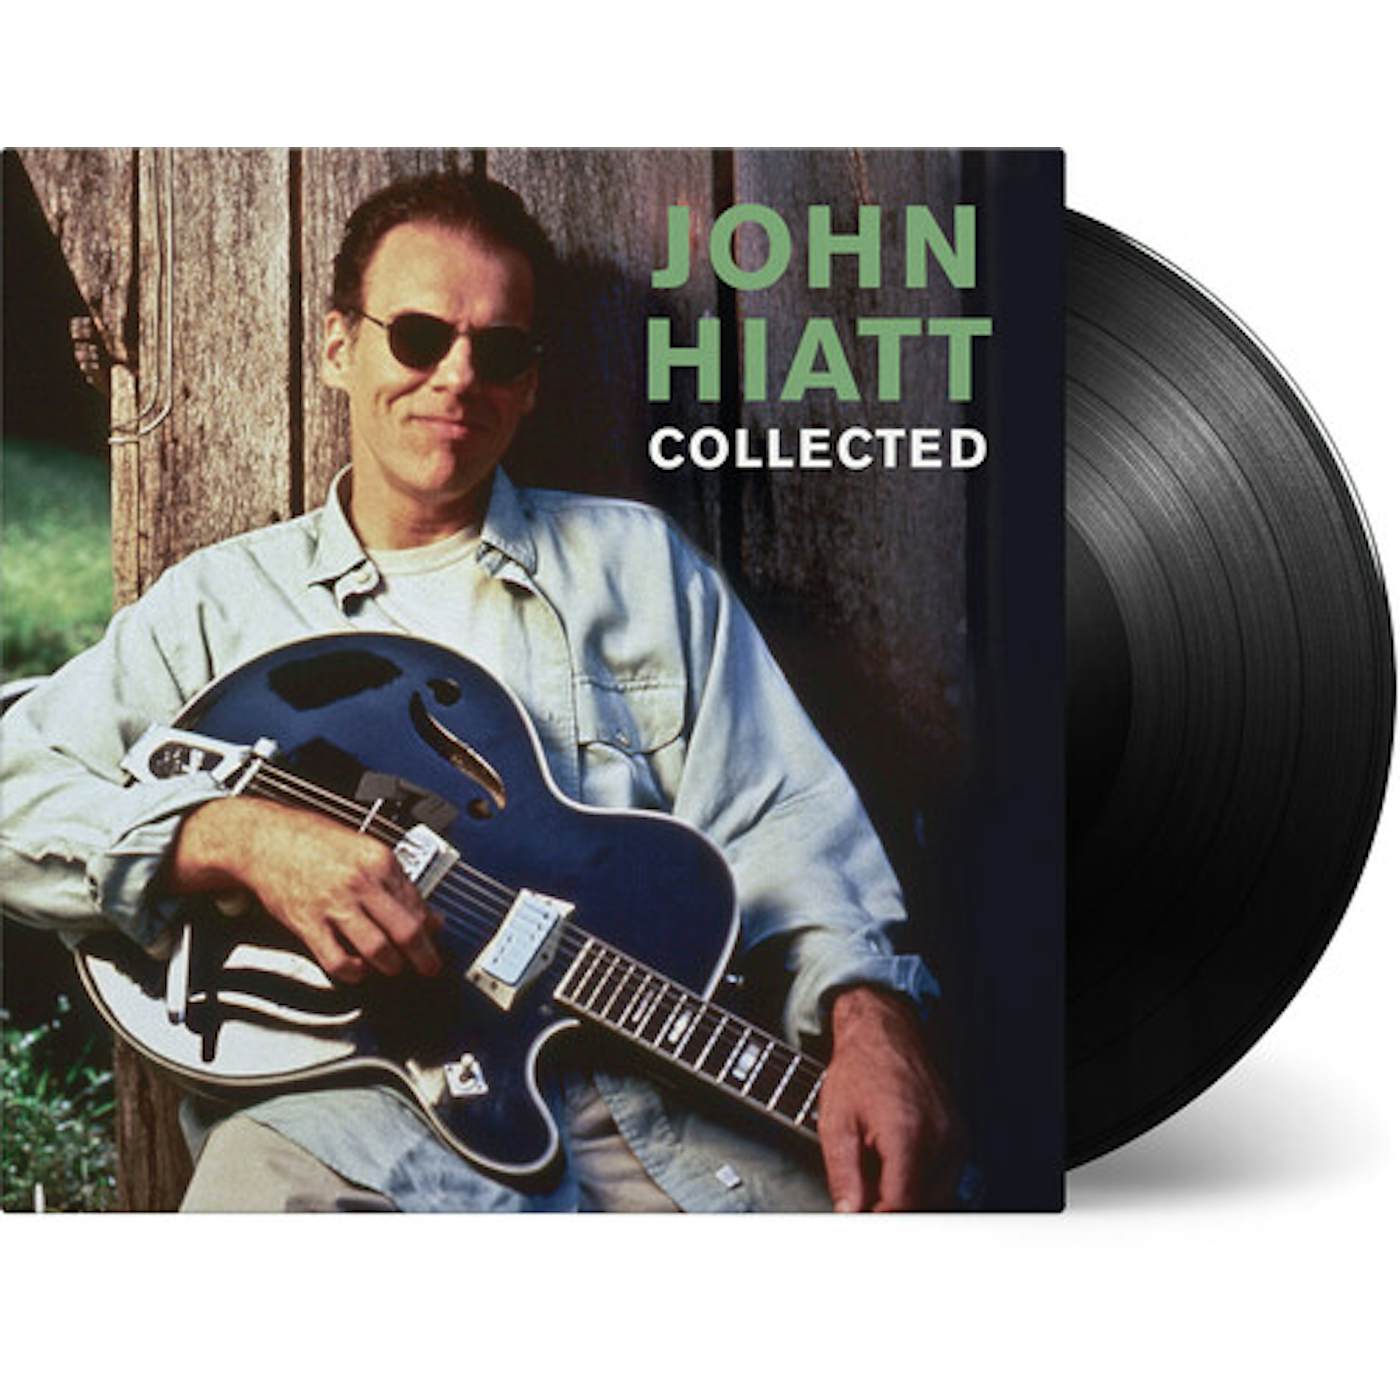 John Hiatt Collected (2LP) Vinyl Record